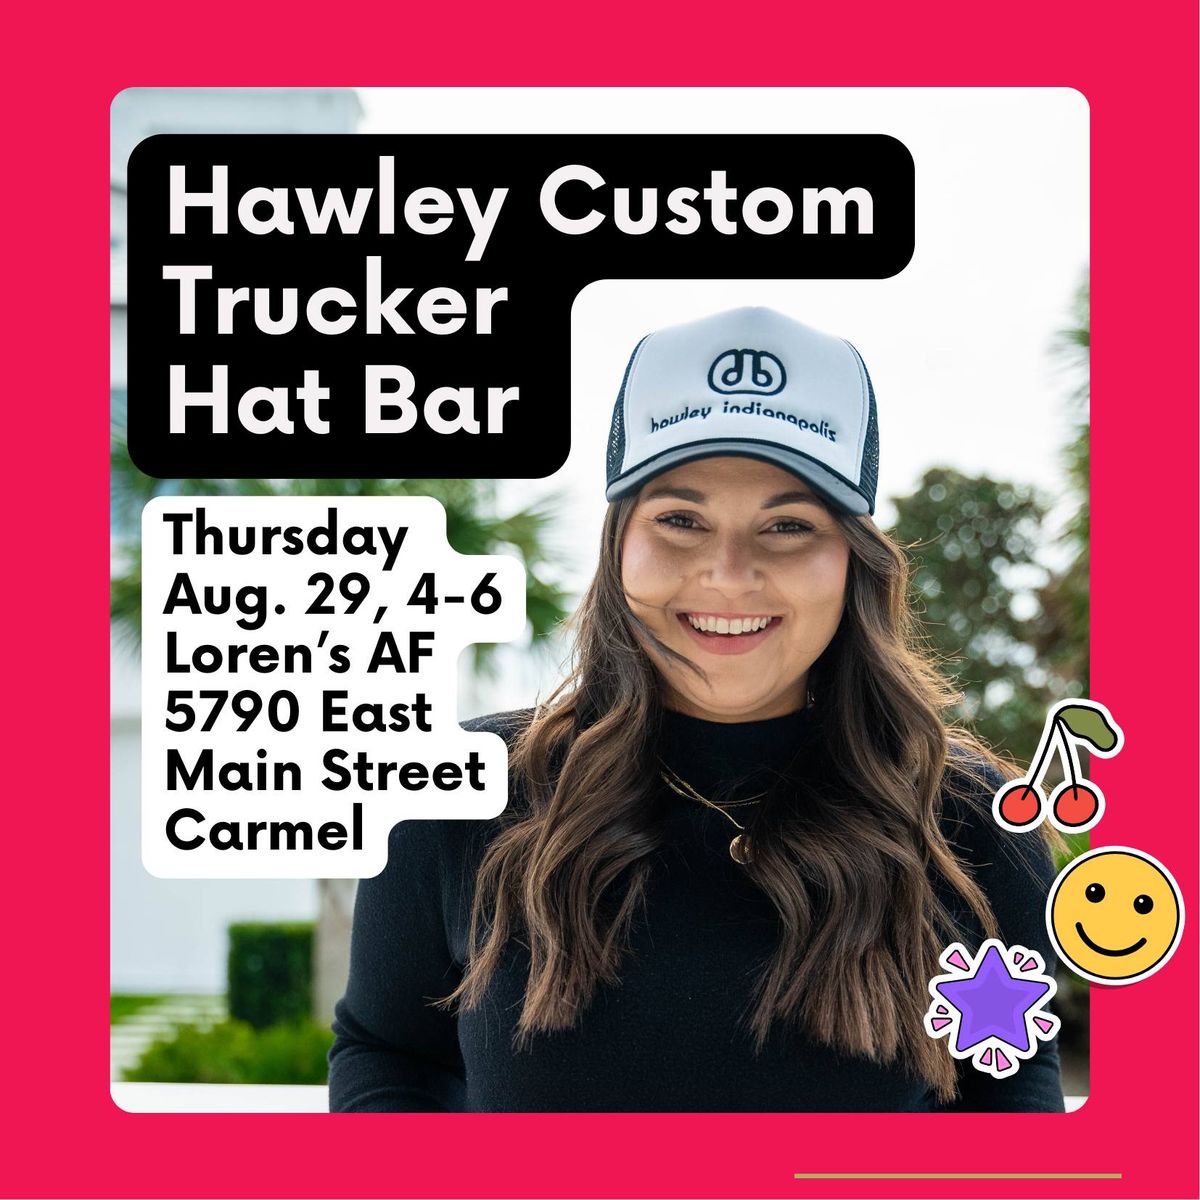 Hawley Custom Trucker Hat Bar at Loren's Alcohol-Free